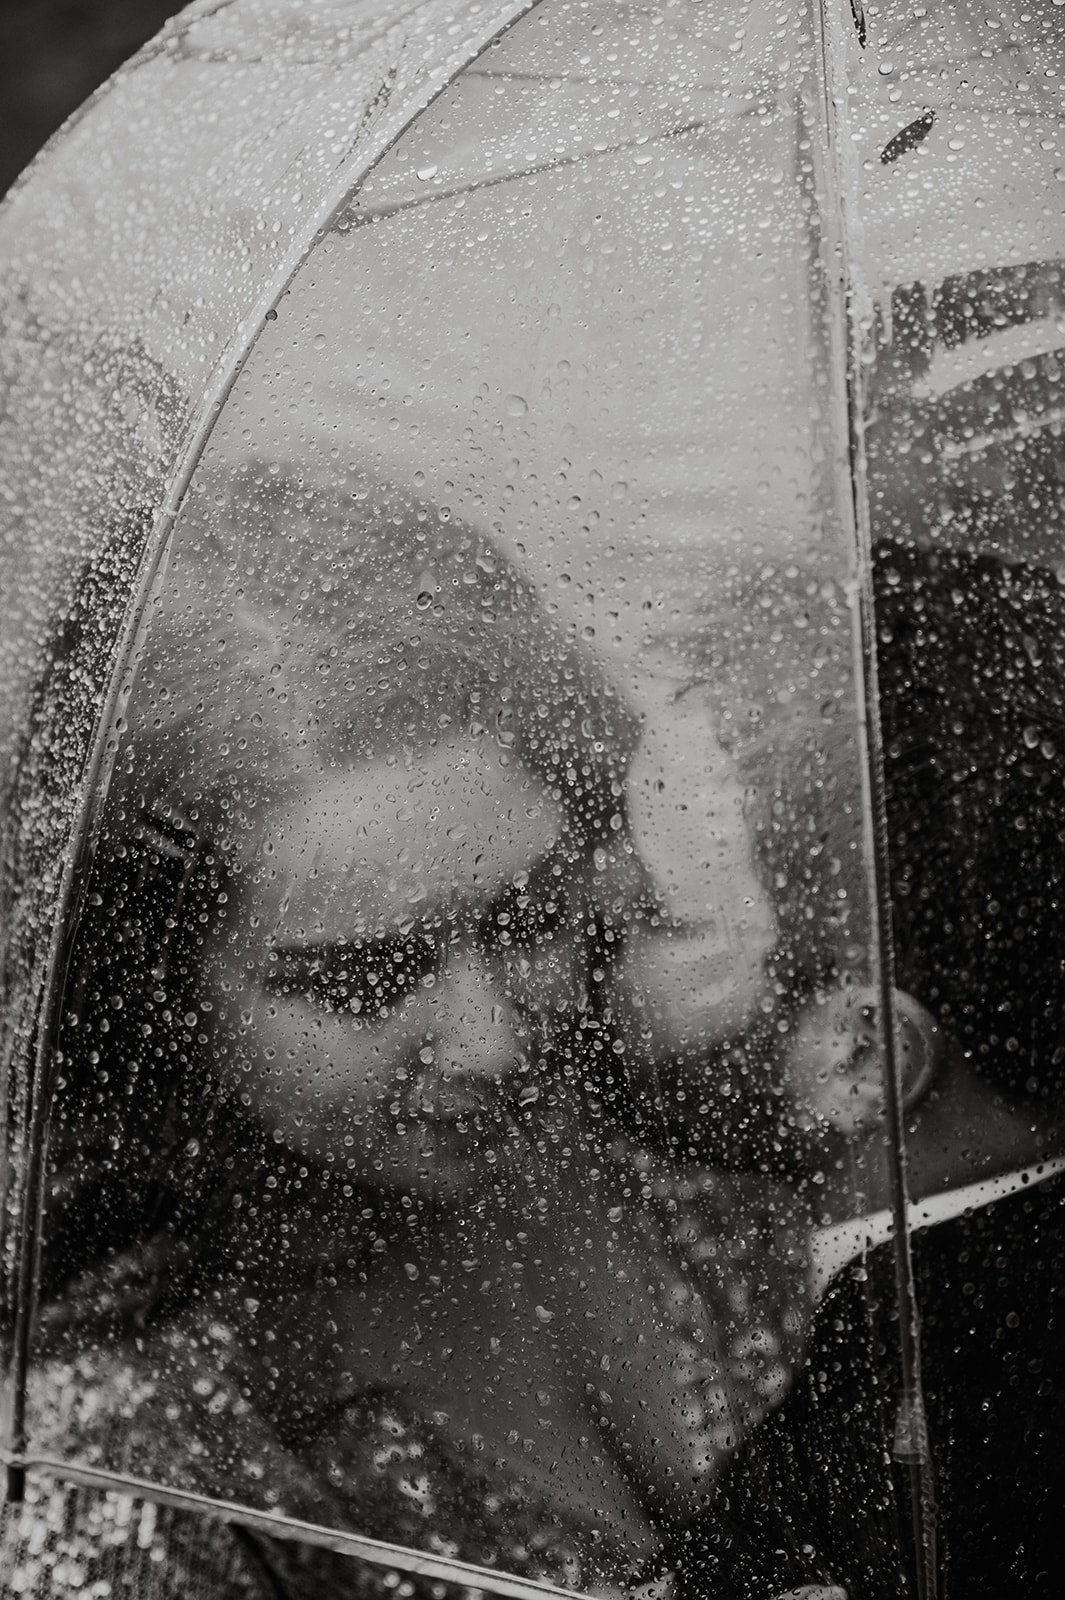 bride and groom kissing under an umbrella in the rain in alaska